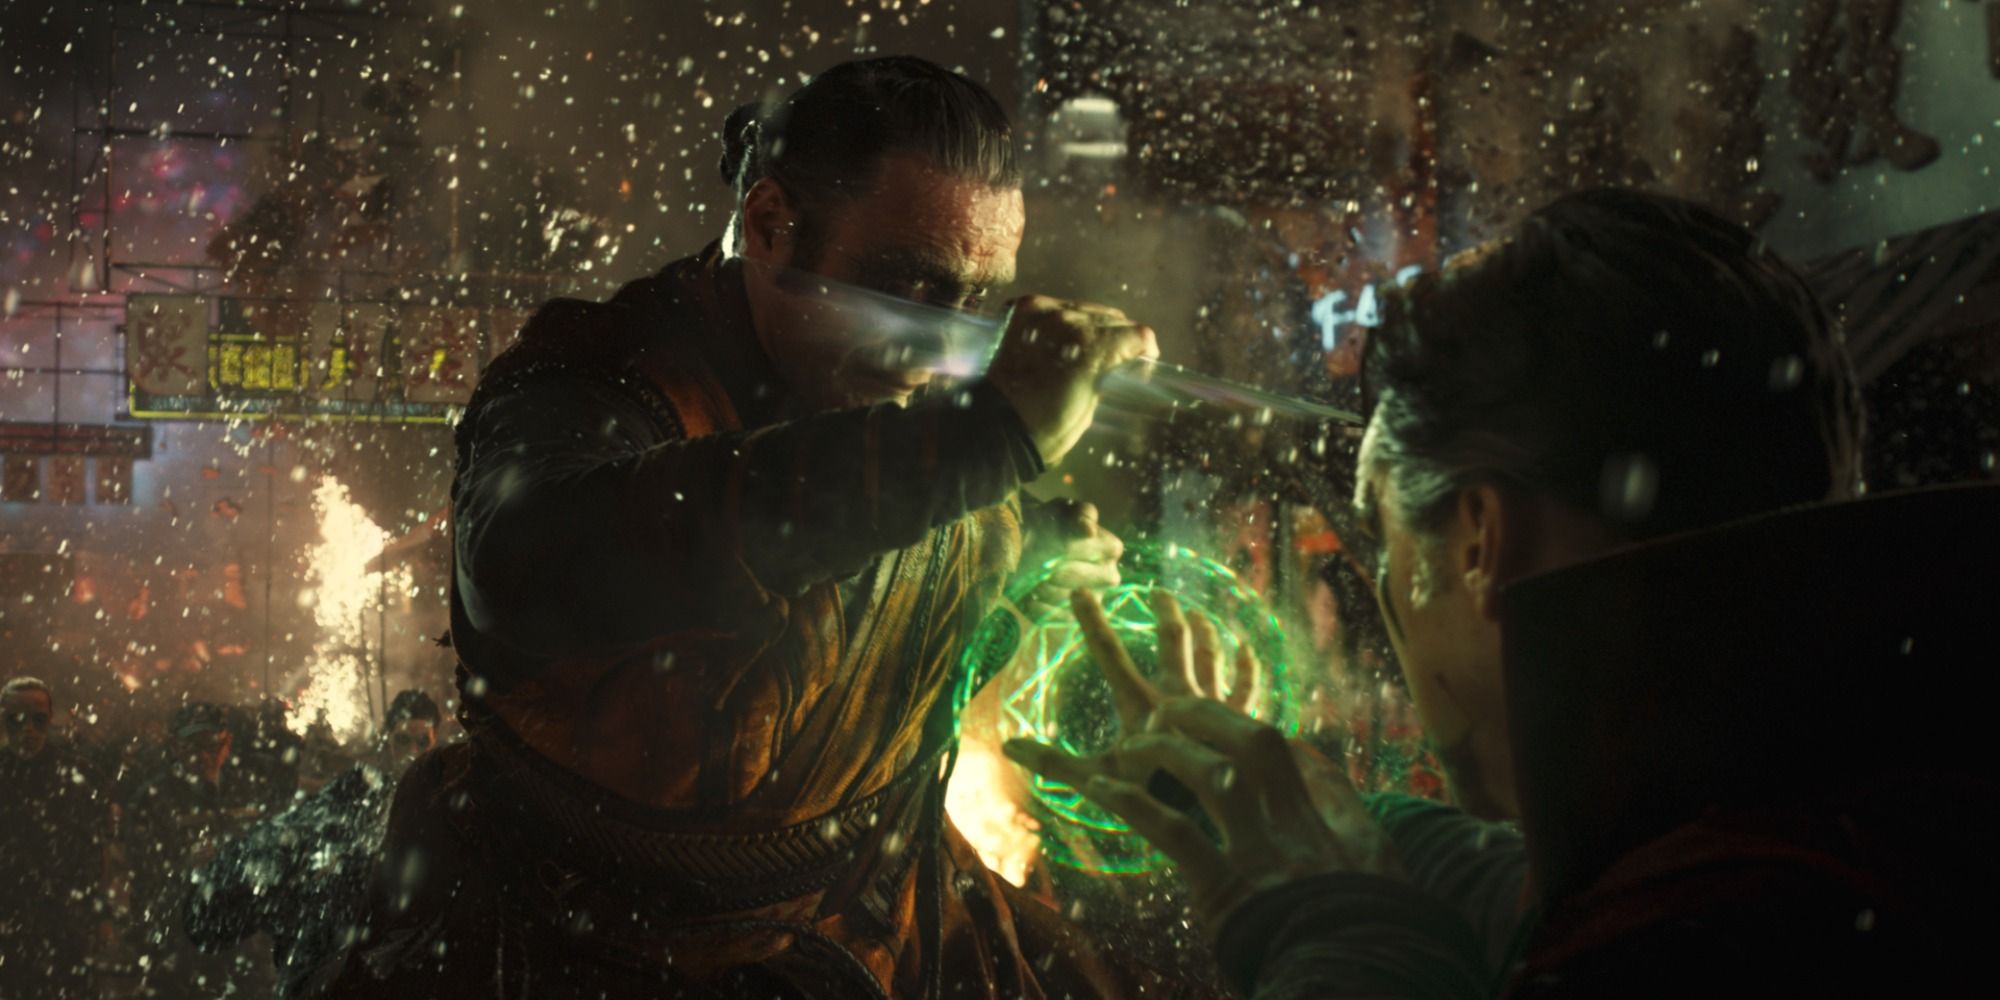 Stephen Strange stops Kaecilius with the Time Stone in Doctor Strange